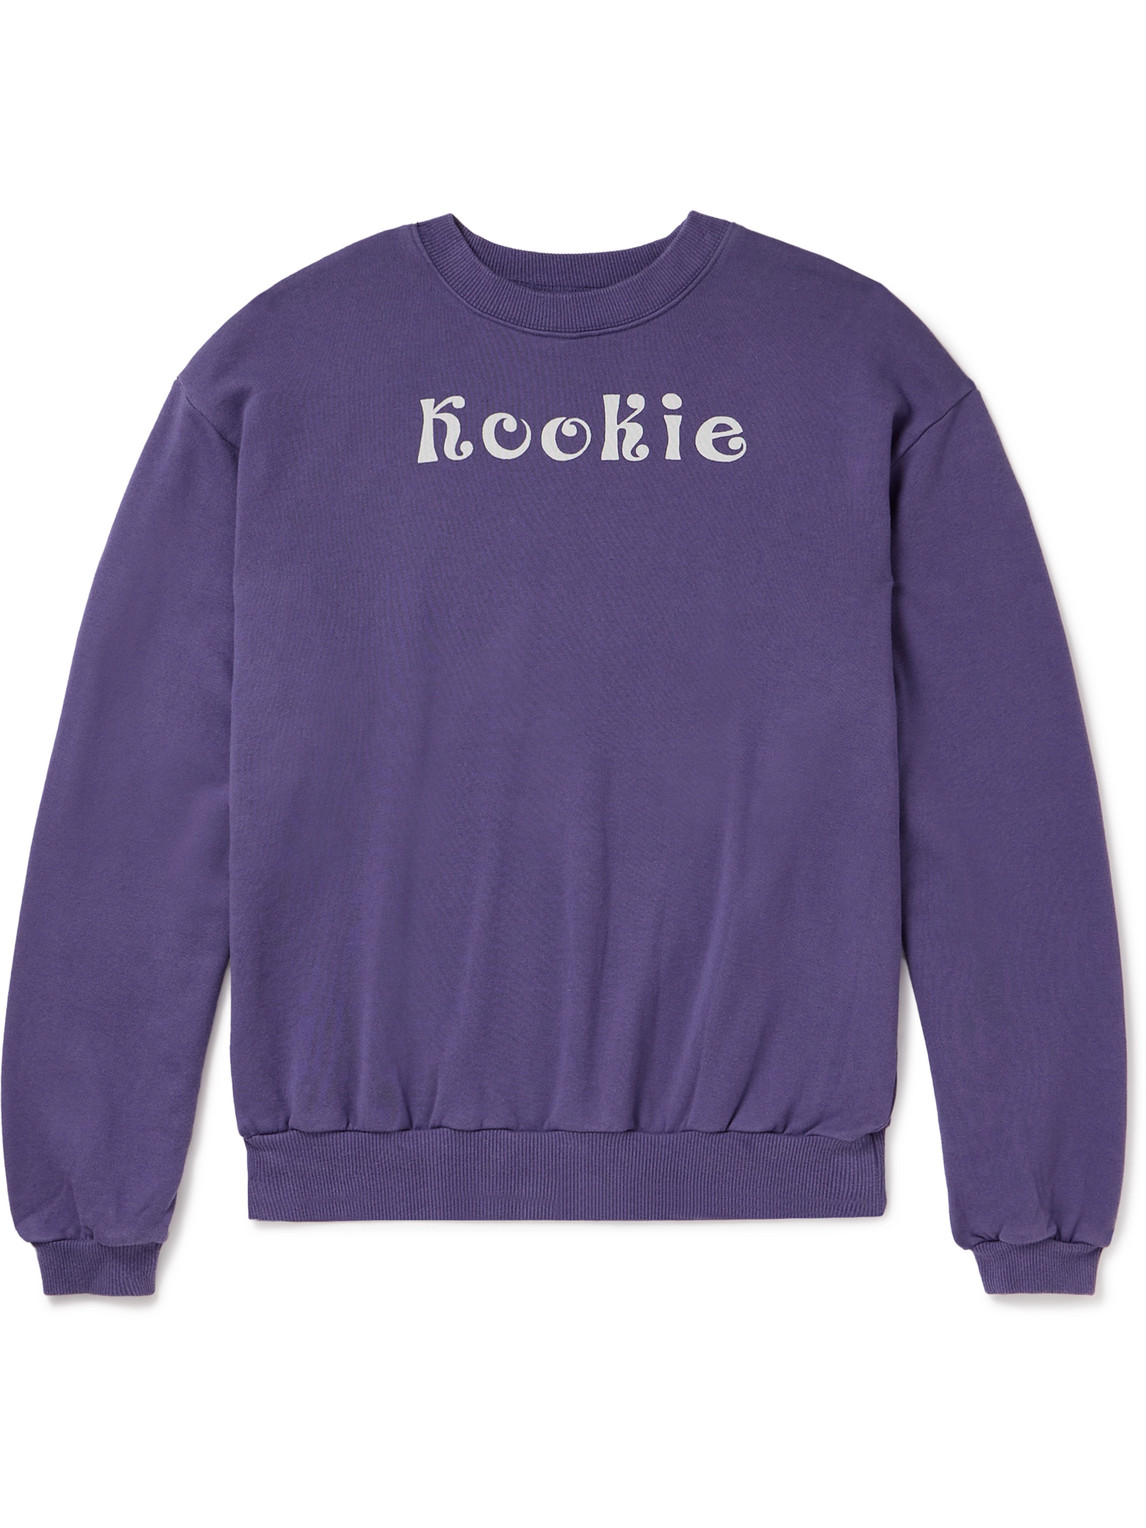 Kapital Kookie Printed Cotton-jersey Sweatshirt In Purple